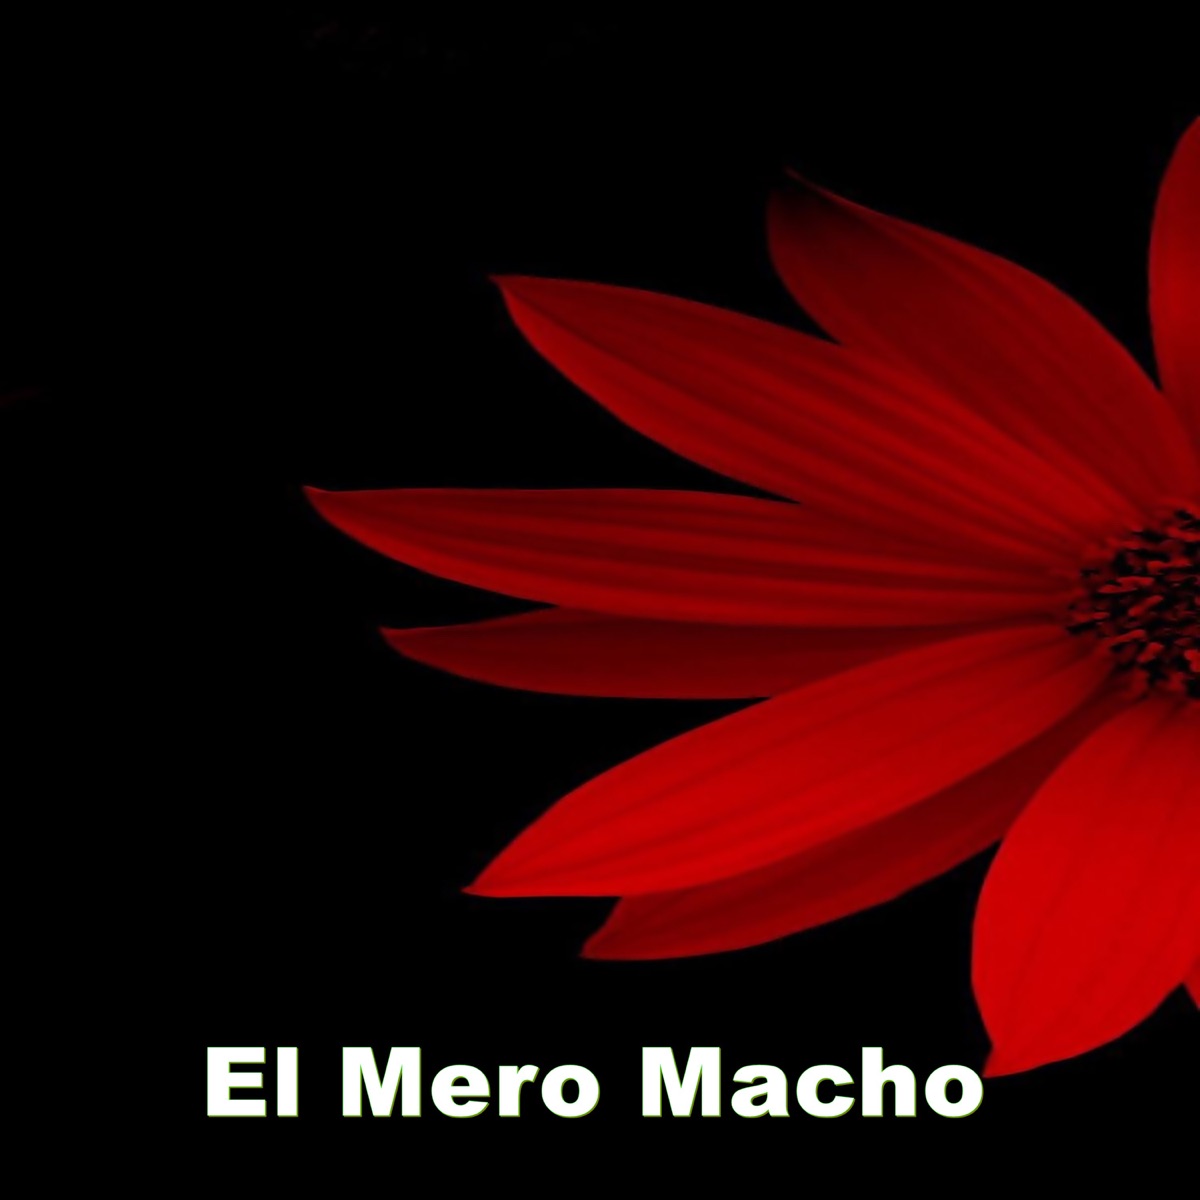 El Mero Macho - Single - Album by Big Show Del Mambo - Apple Music